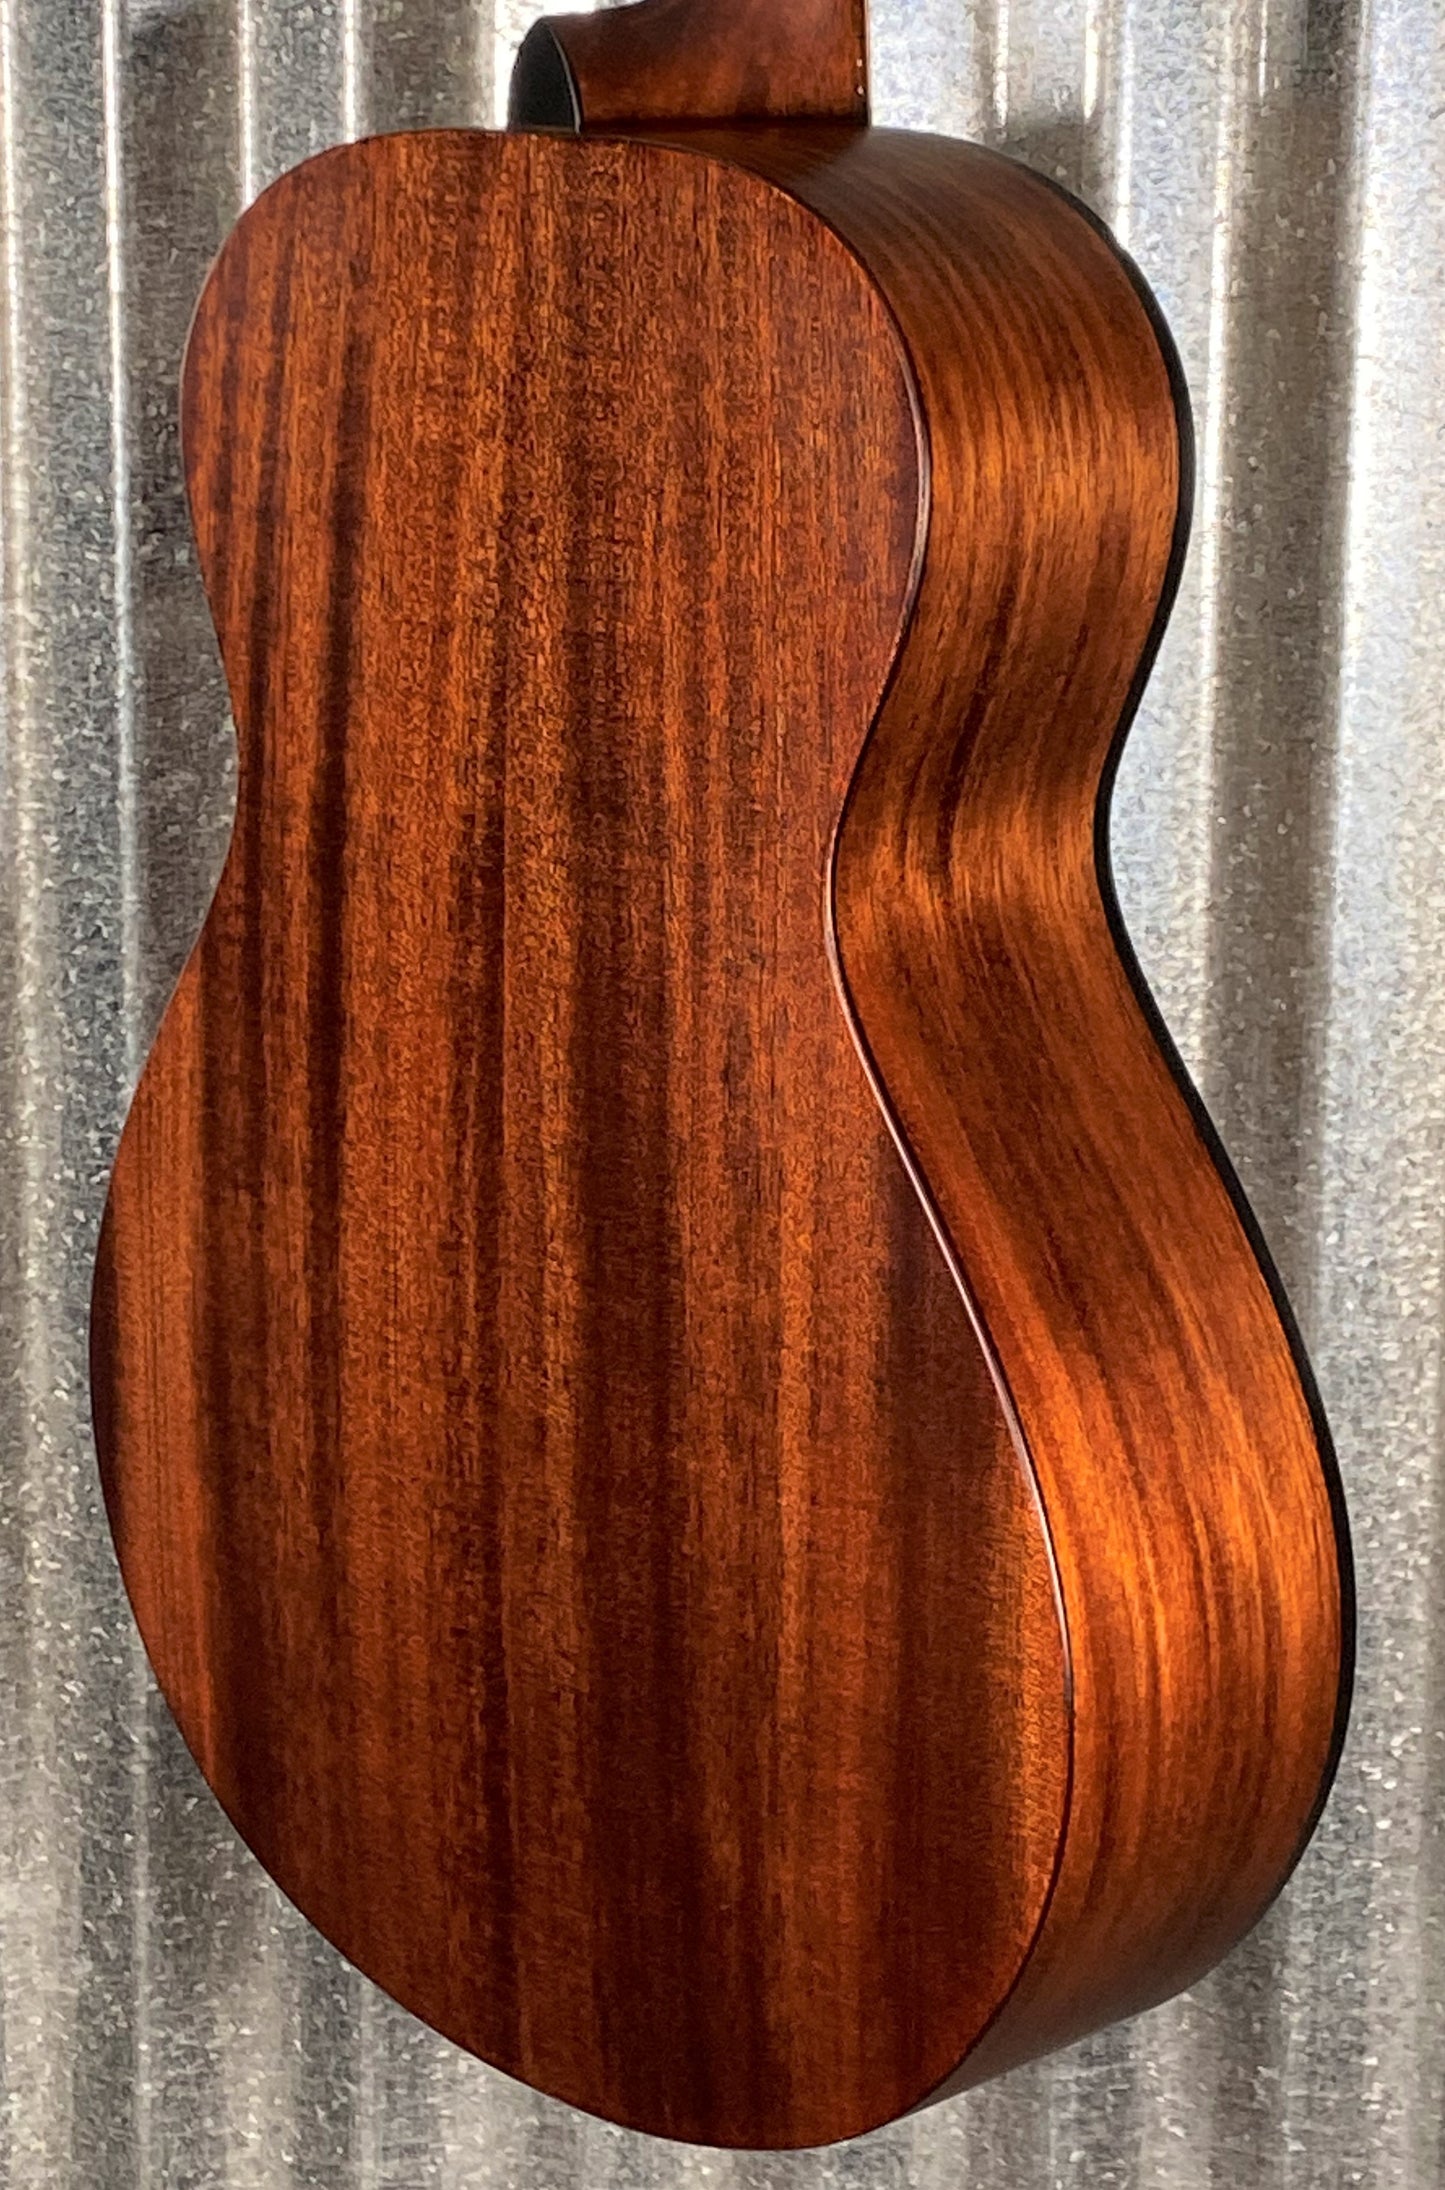 Breedlove Discovery S Concertina Cedar Acoustic Guitar #8286